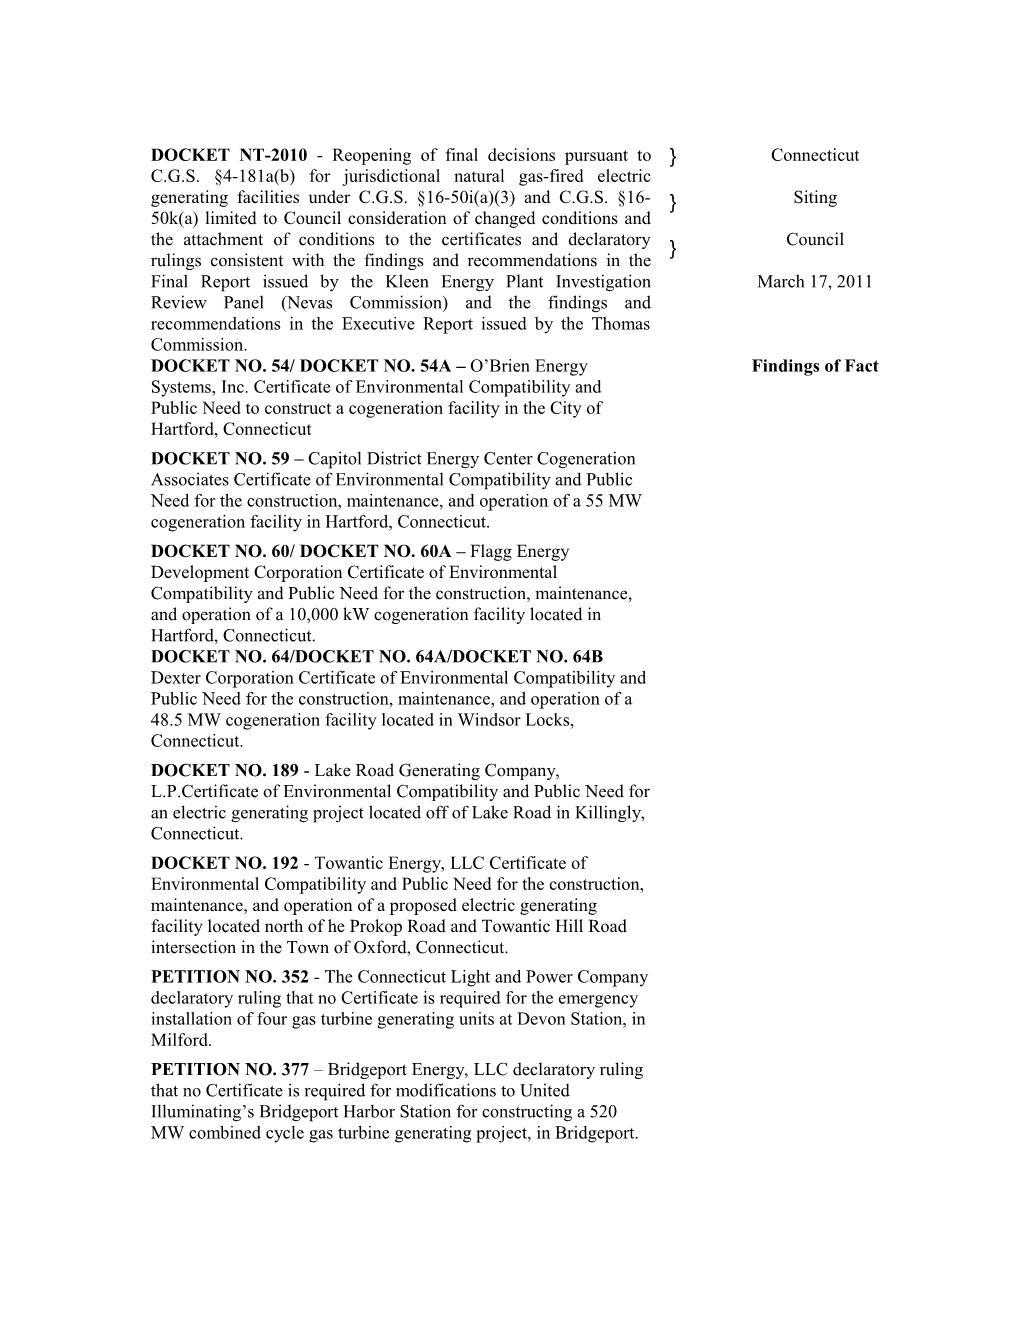 Kleen Energy Plant Investigation Review Panel (Nevas Commission)